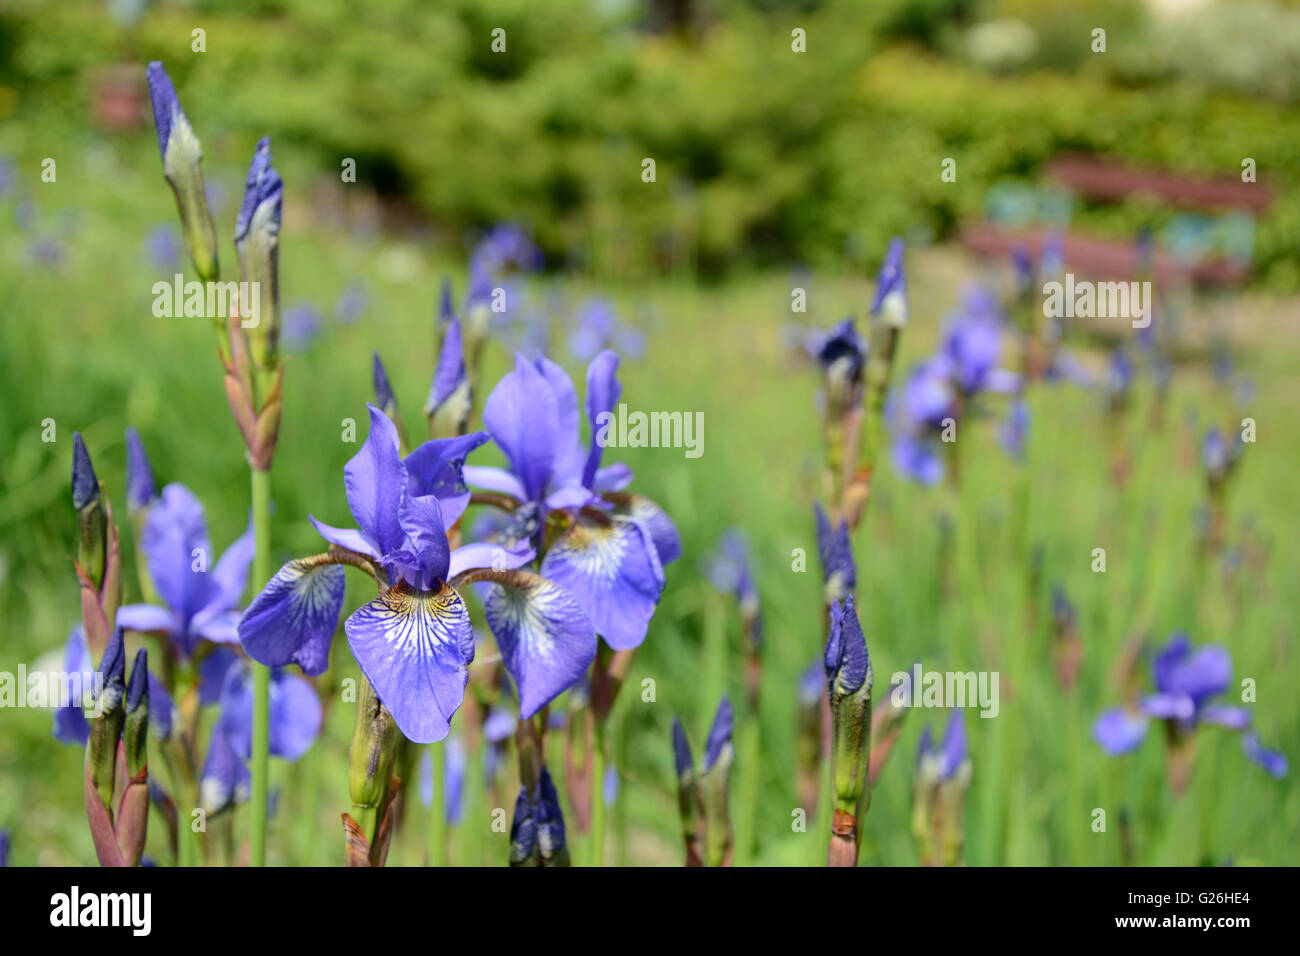 Iris blue flowers in garden close up Stock Photo